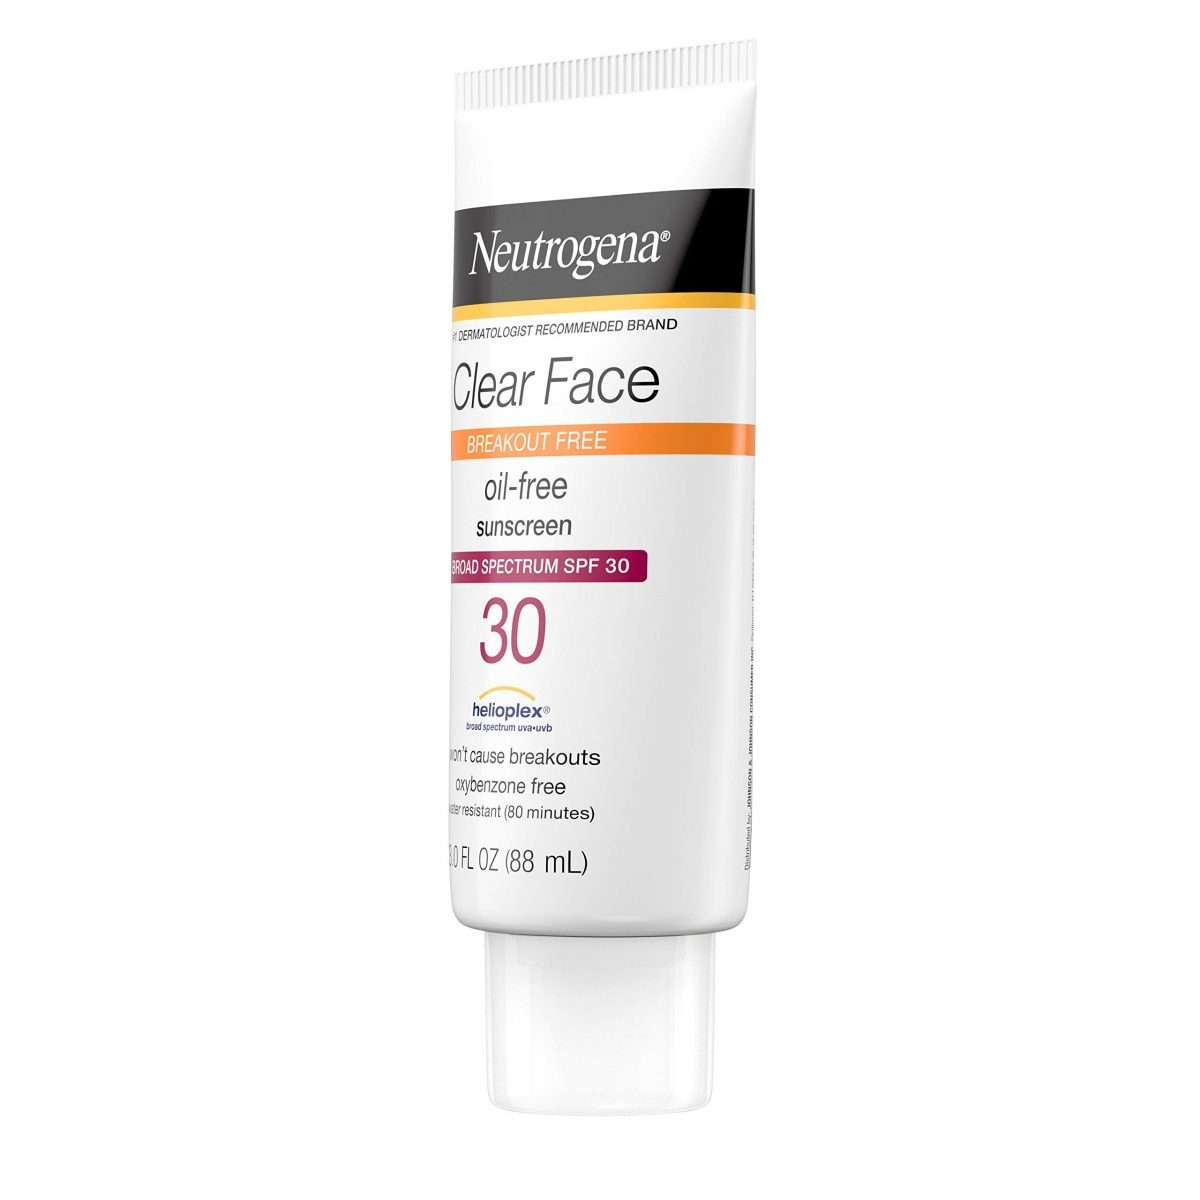 Neutrogena Clear Face Liquid Lotion Sunscreen for Acne